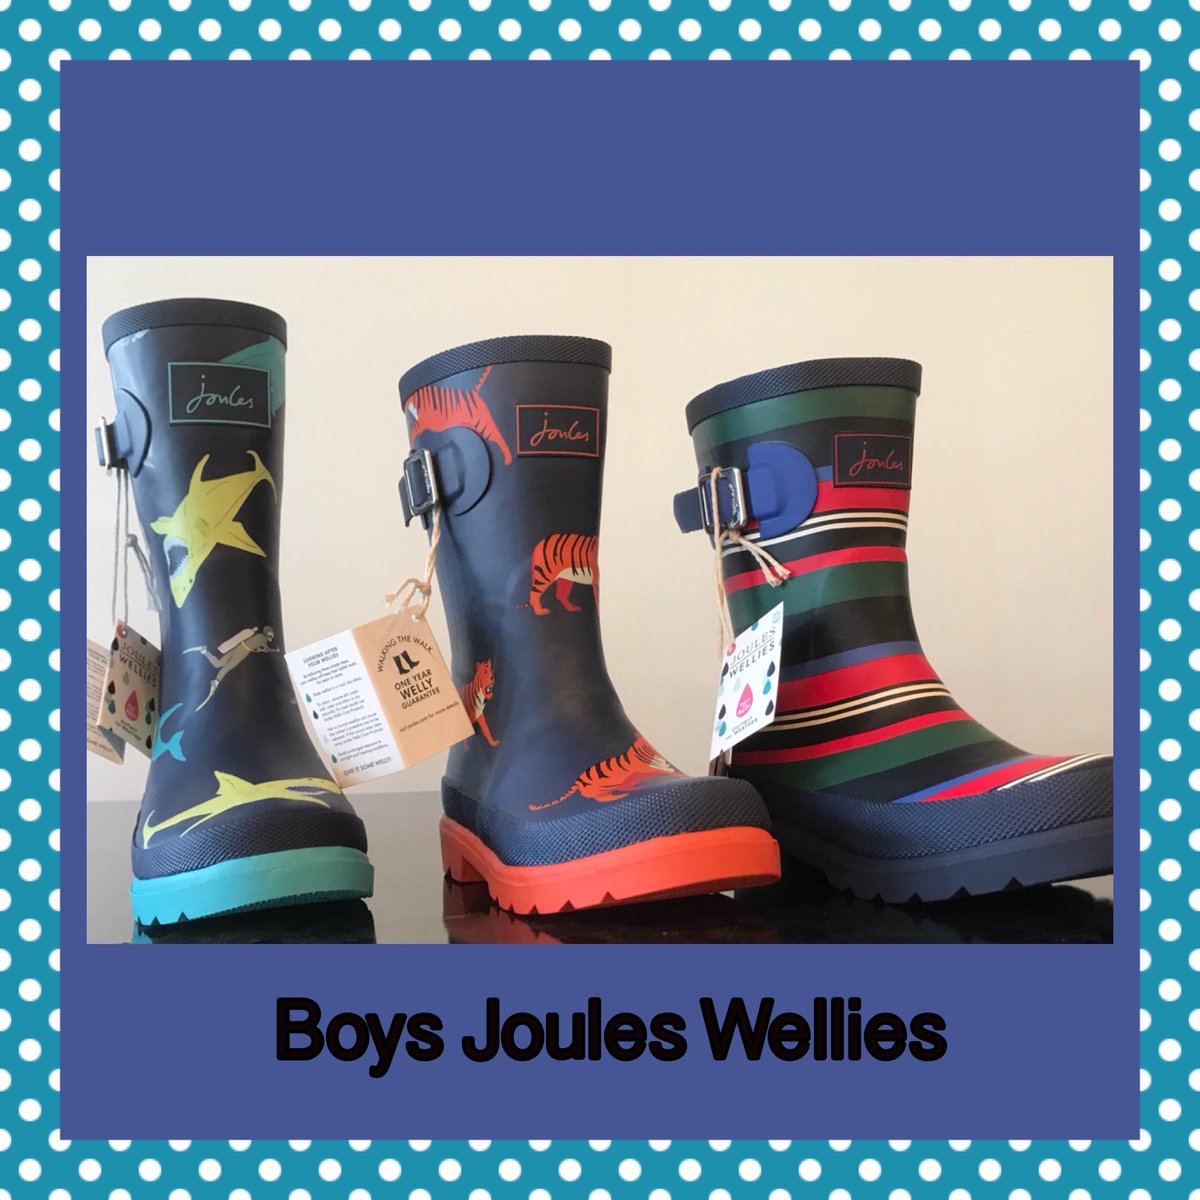 #flashsale💦 Boys #jouleswellies 💦 Last 3 pair in stock 💦 50% off 💦 #shark Size 2, #tiger Size 13, #stripe Size 2 $22.50 each💧#wynkkids #sale